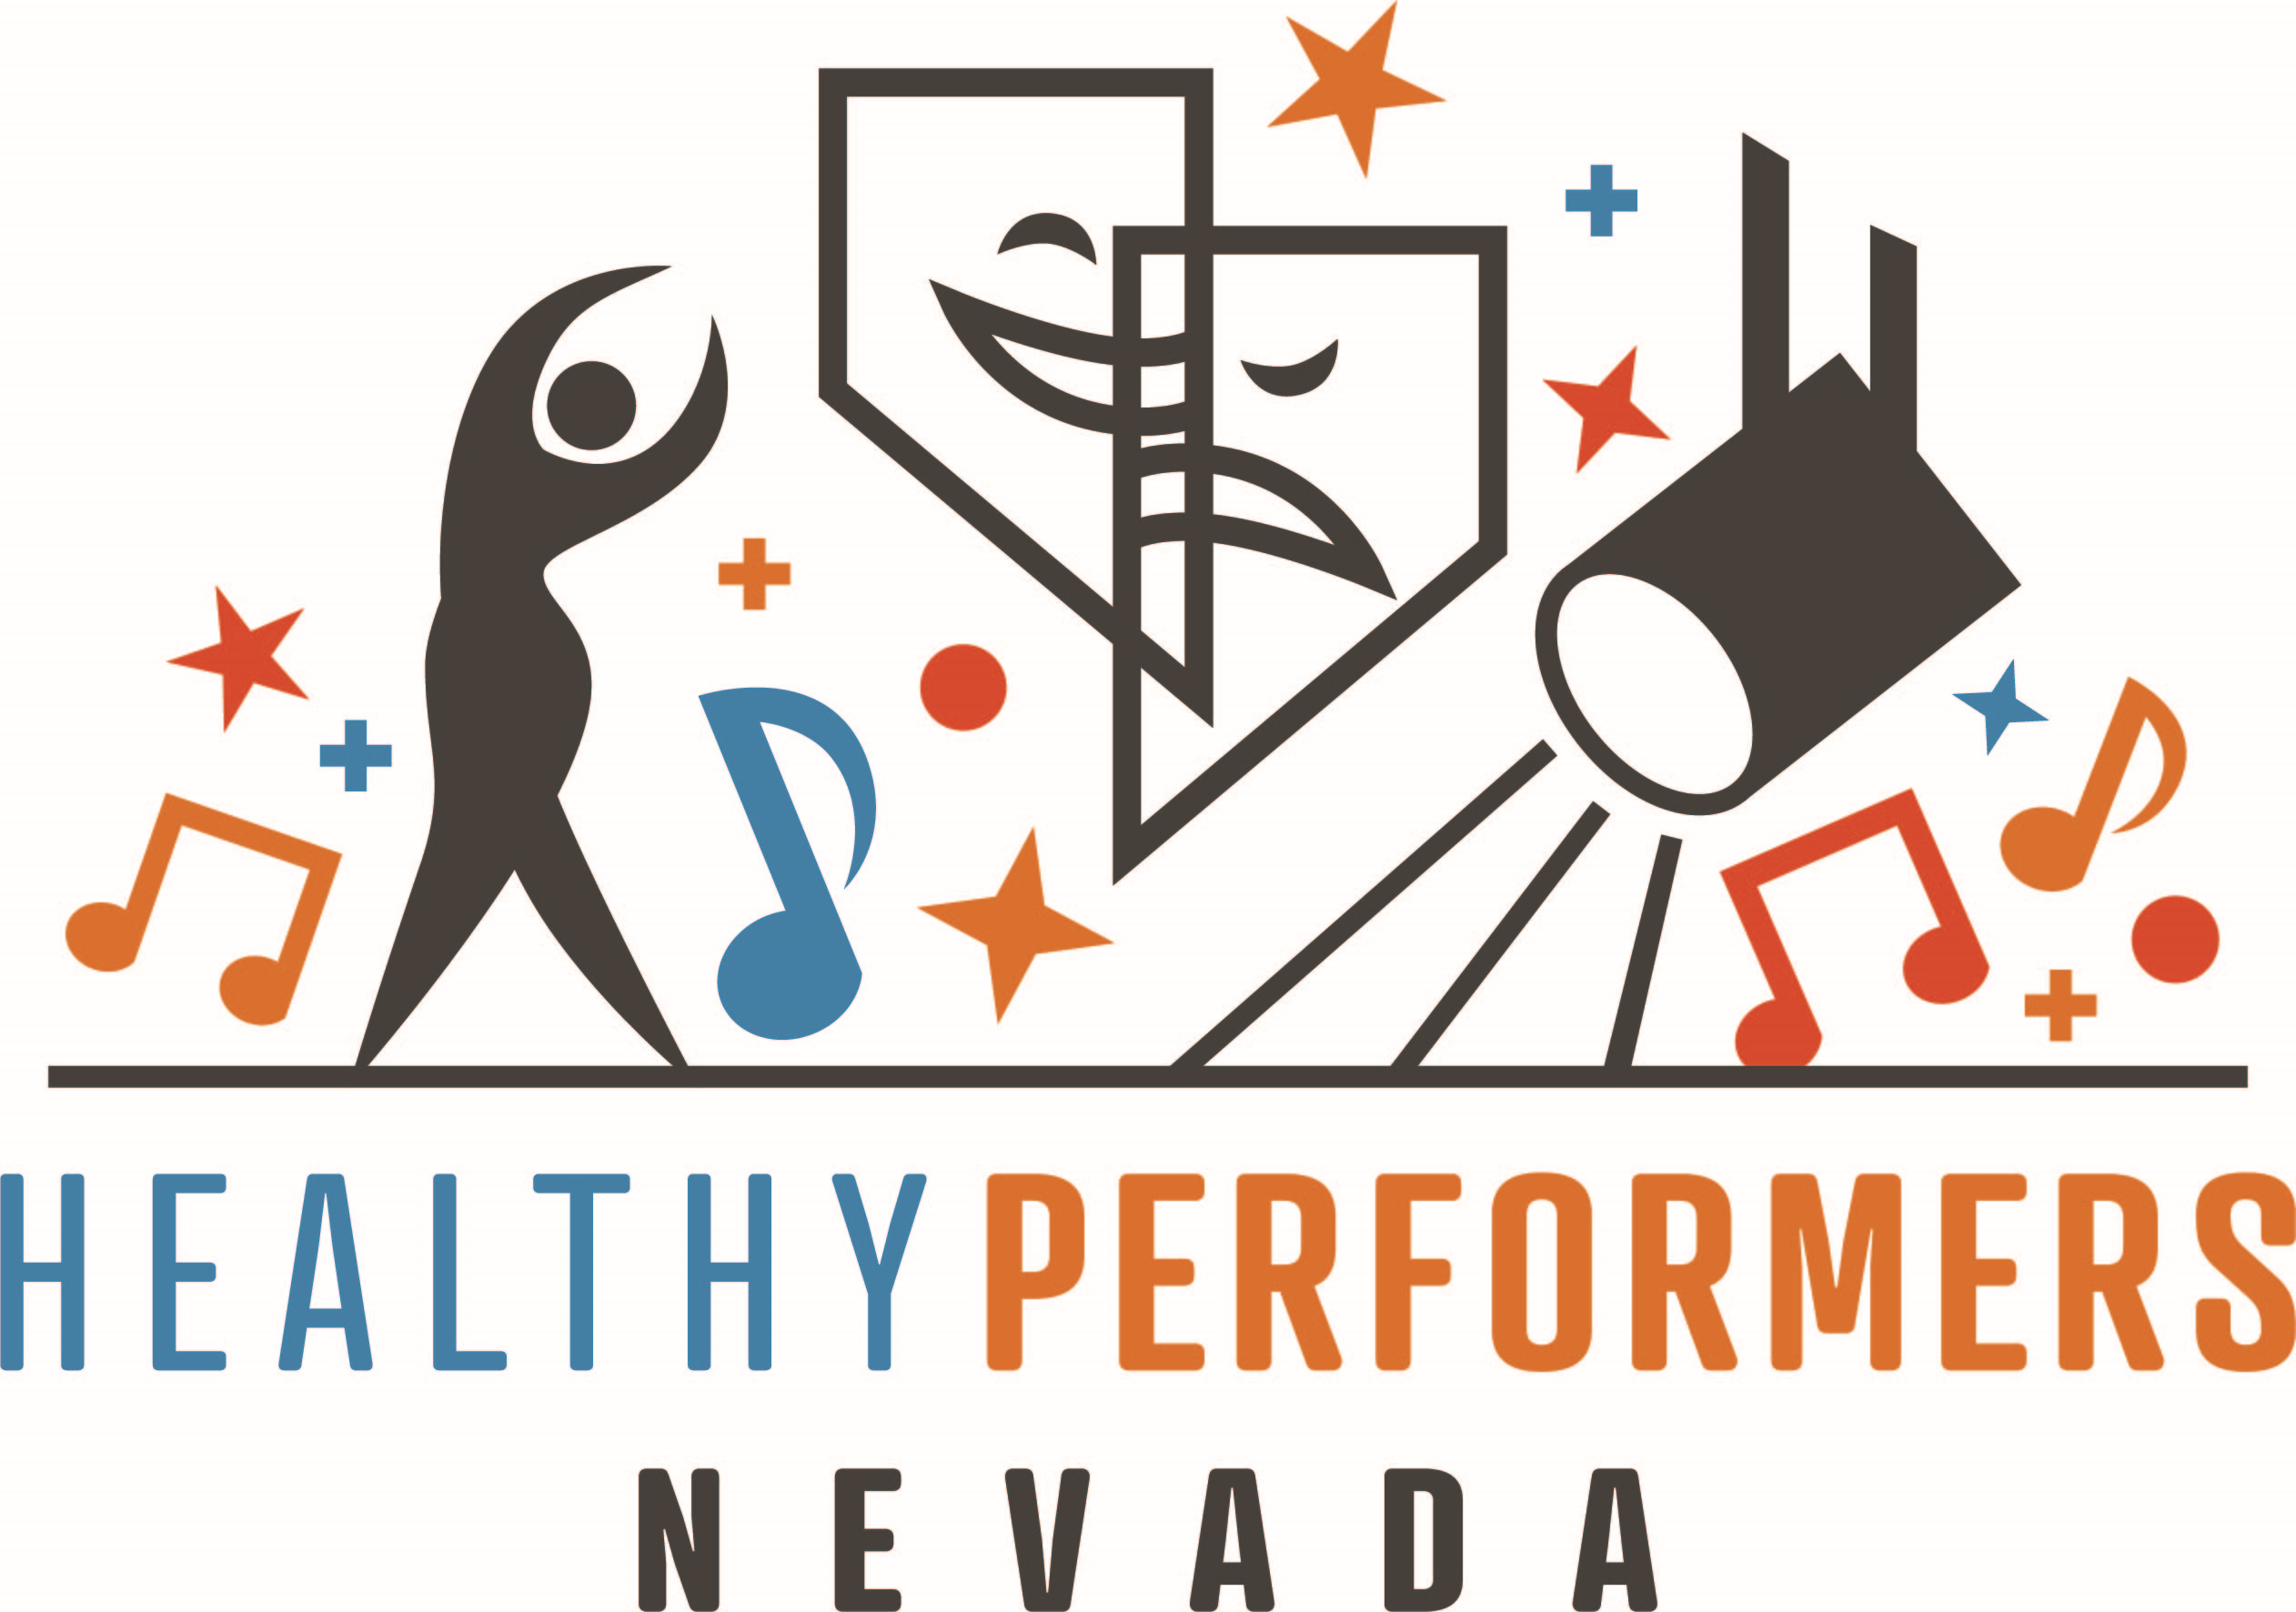 Healthy Performers Nevada